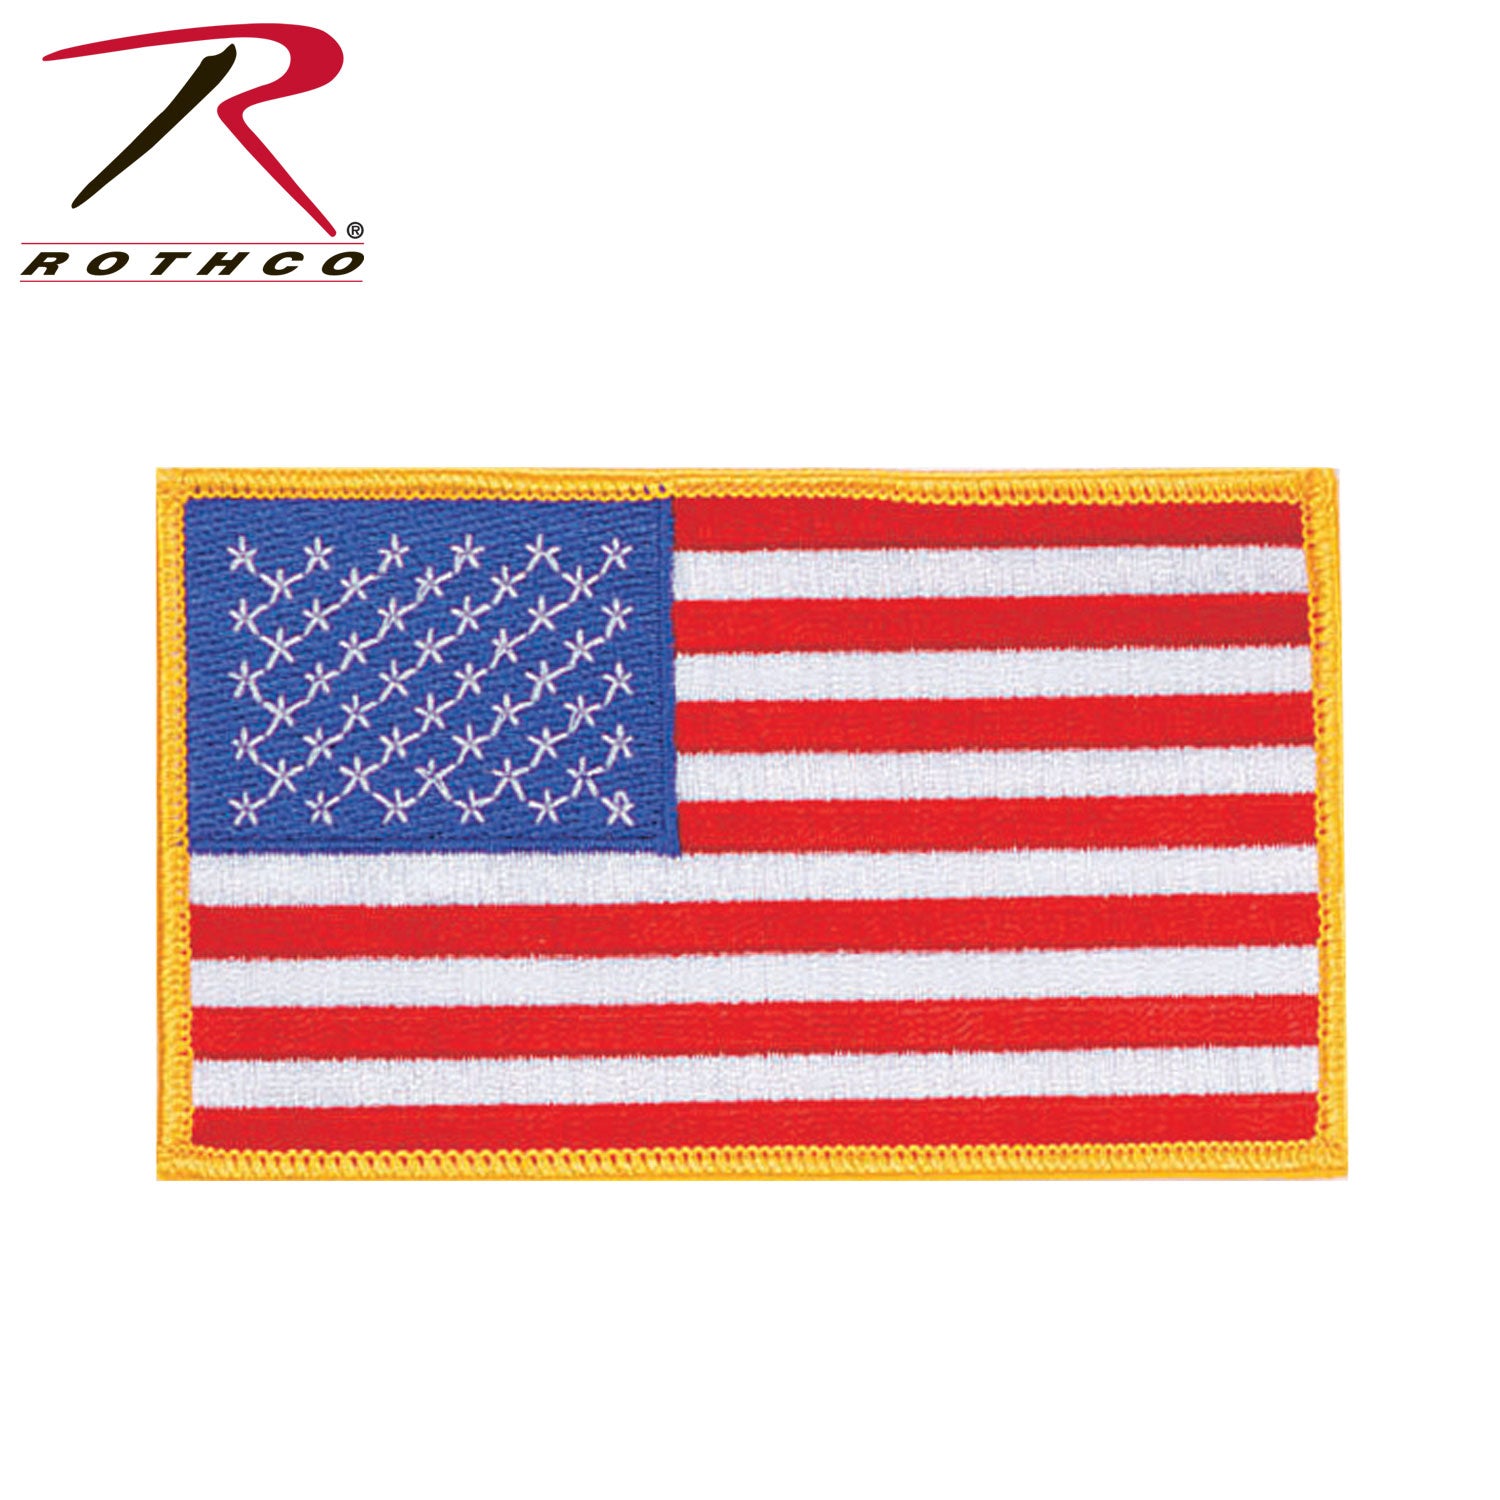 Rothco US Flag Patch - Large 3x5 Flag